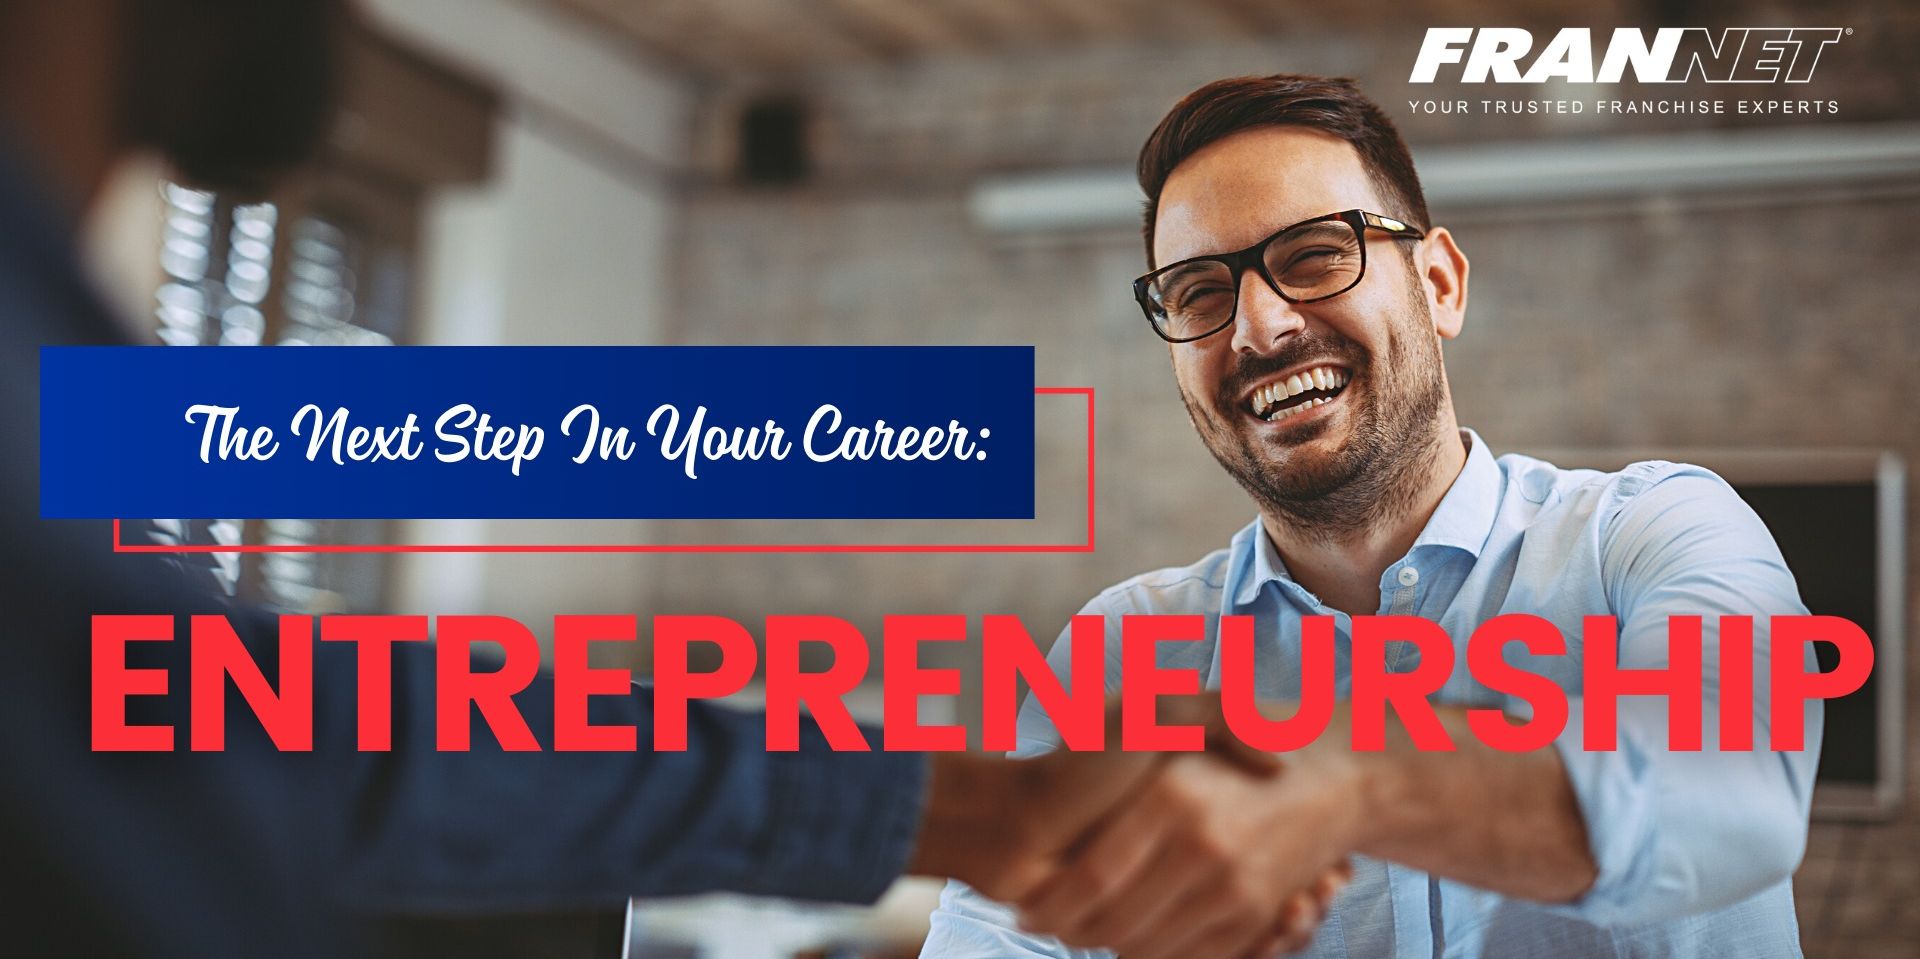 Is Entrepreneurship Your Next Step? promotional image